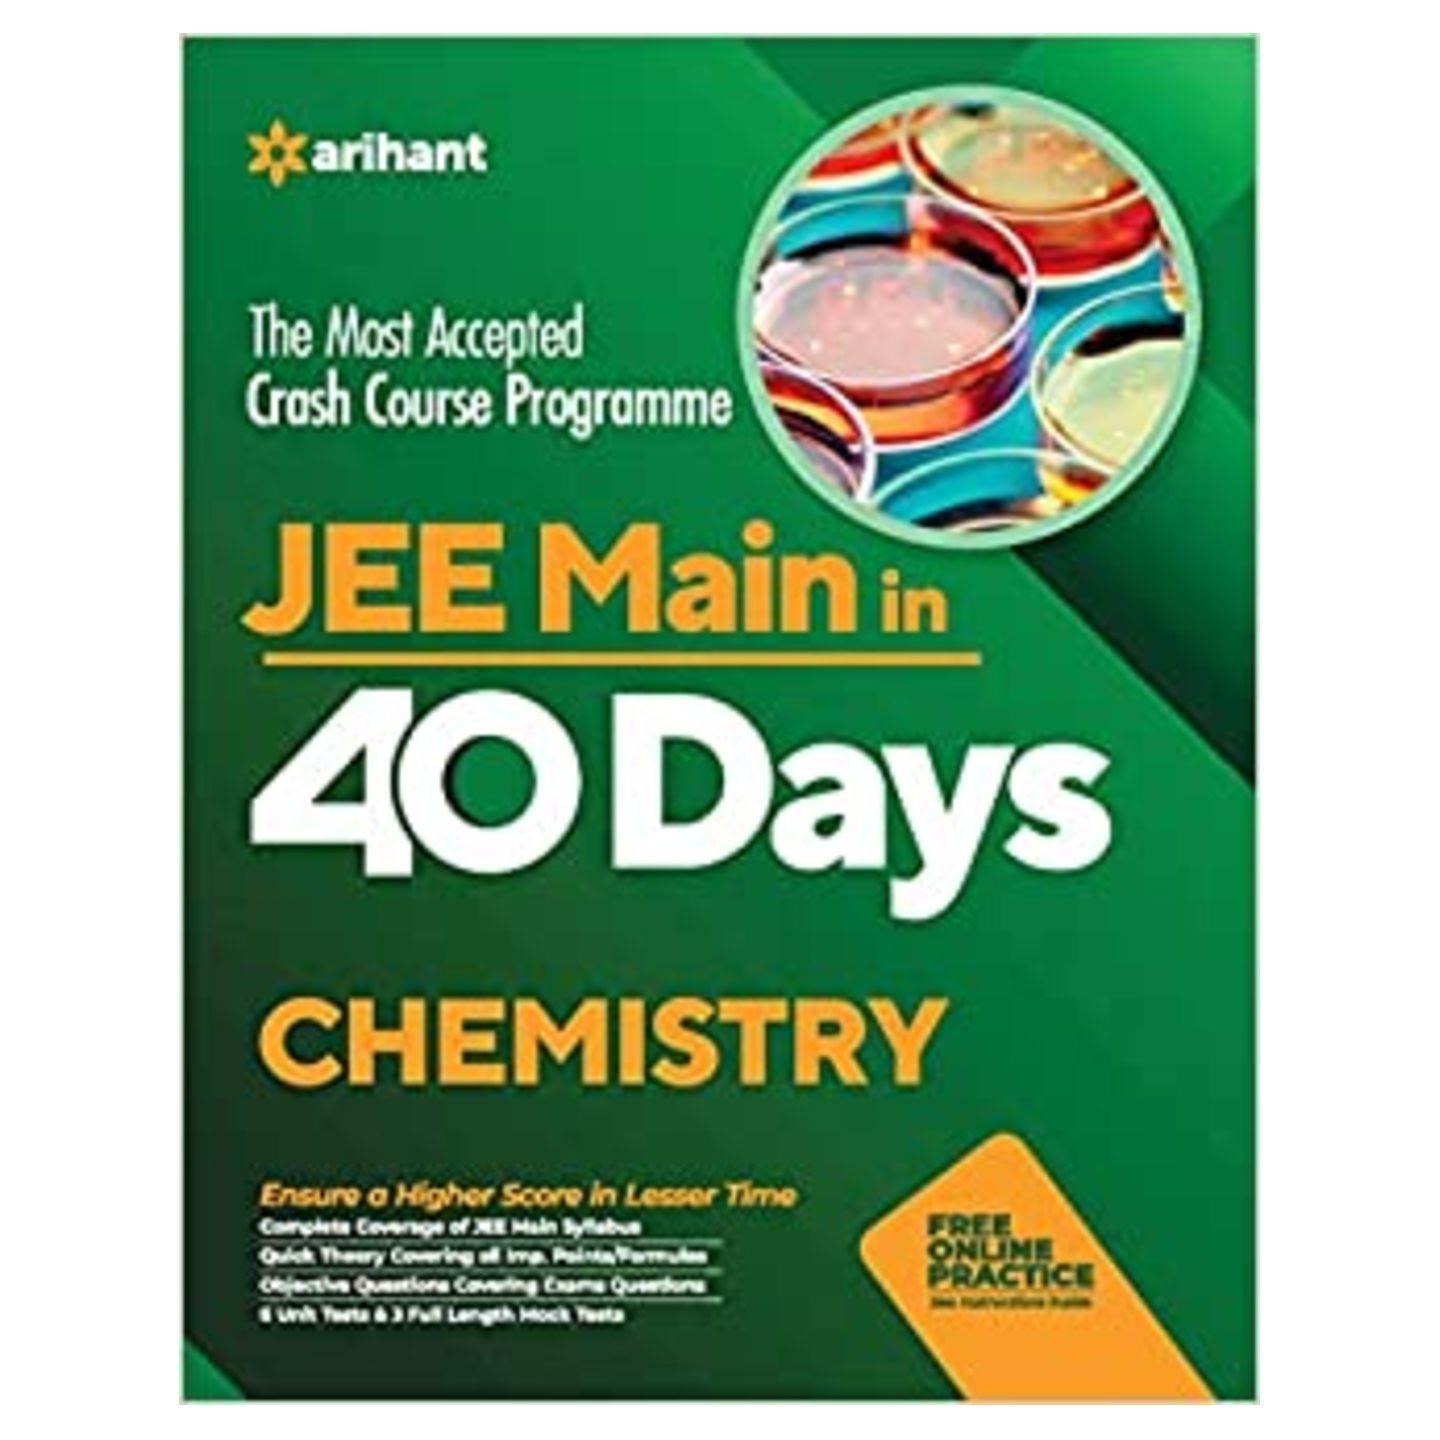 ARIHANT 40 Days Crash Course for JEE Main Chemistry